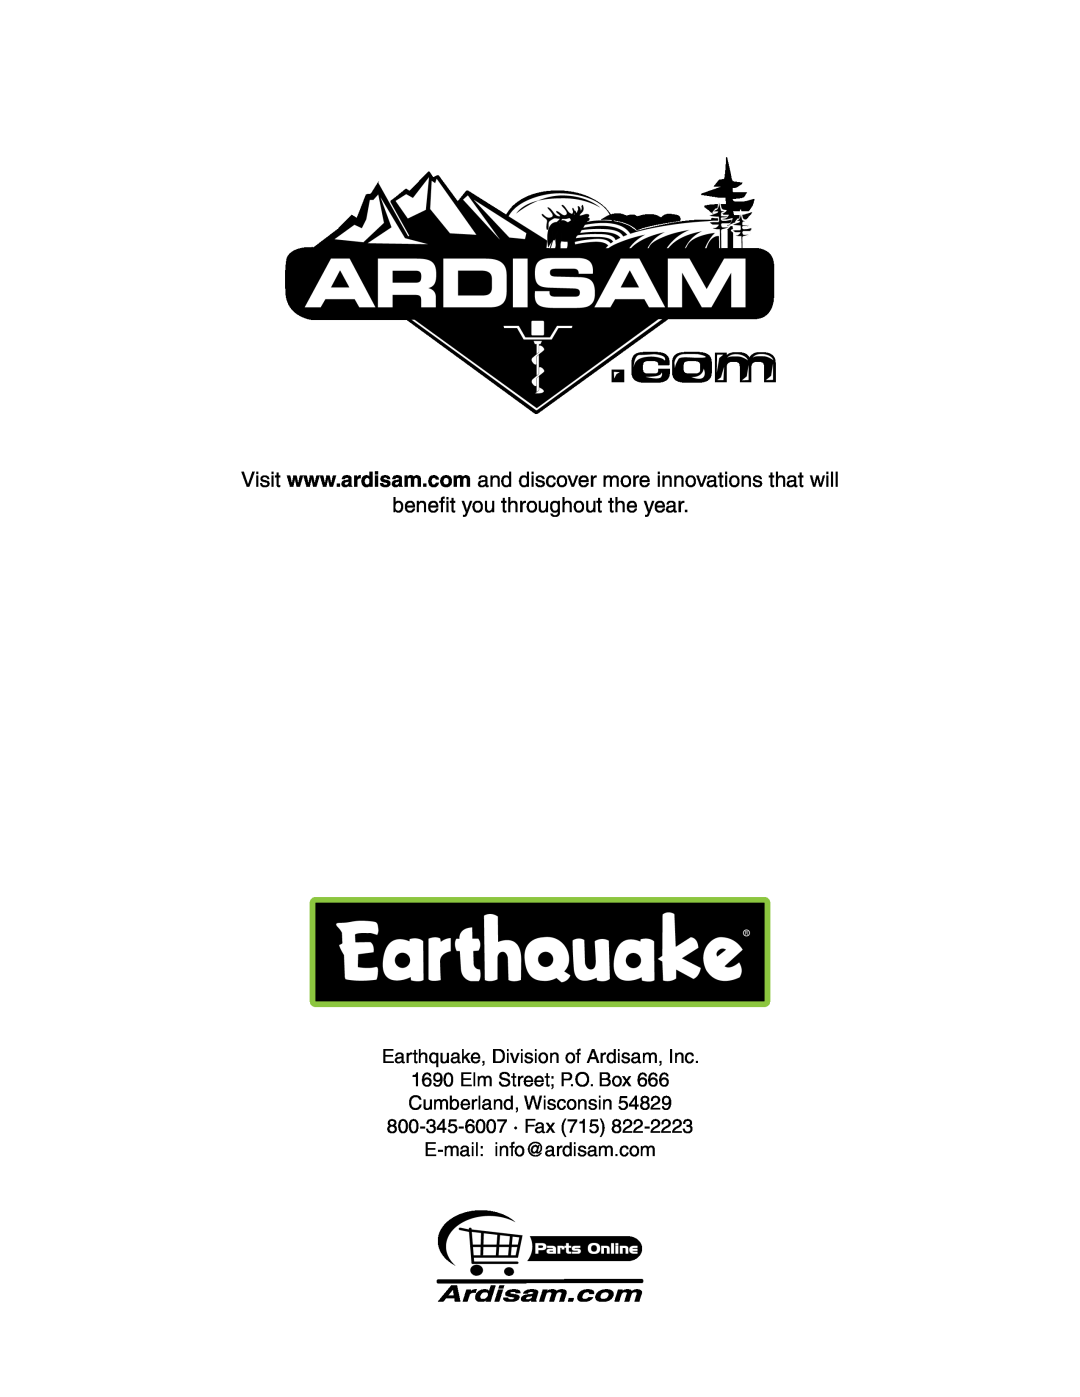 Earthquake Sound ROTOTILLERS Earthquake, Division of Ardisam, Inc 1690 Elm Street P.O. Box, Cumberland, Wisconsin 